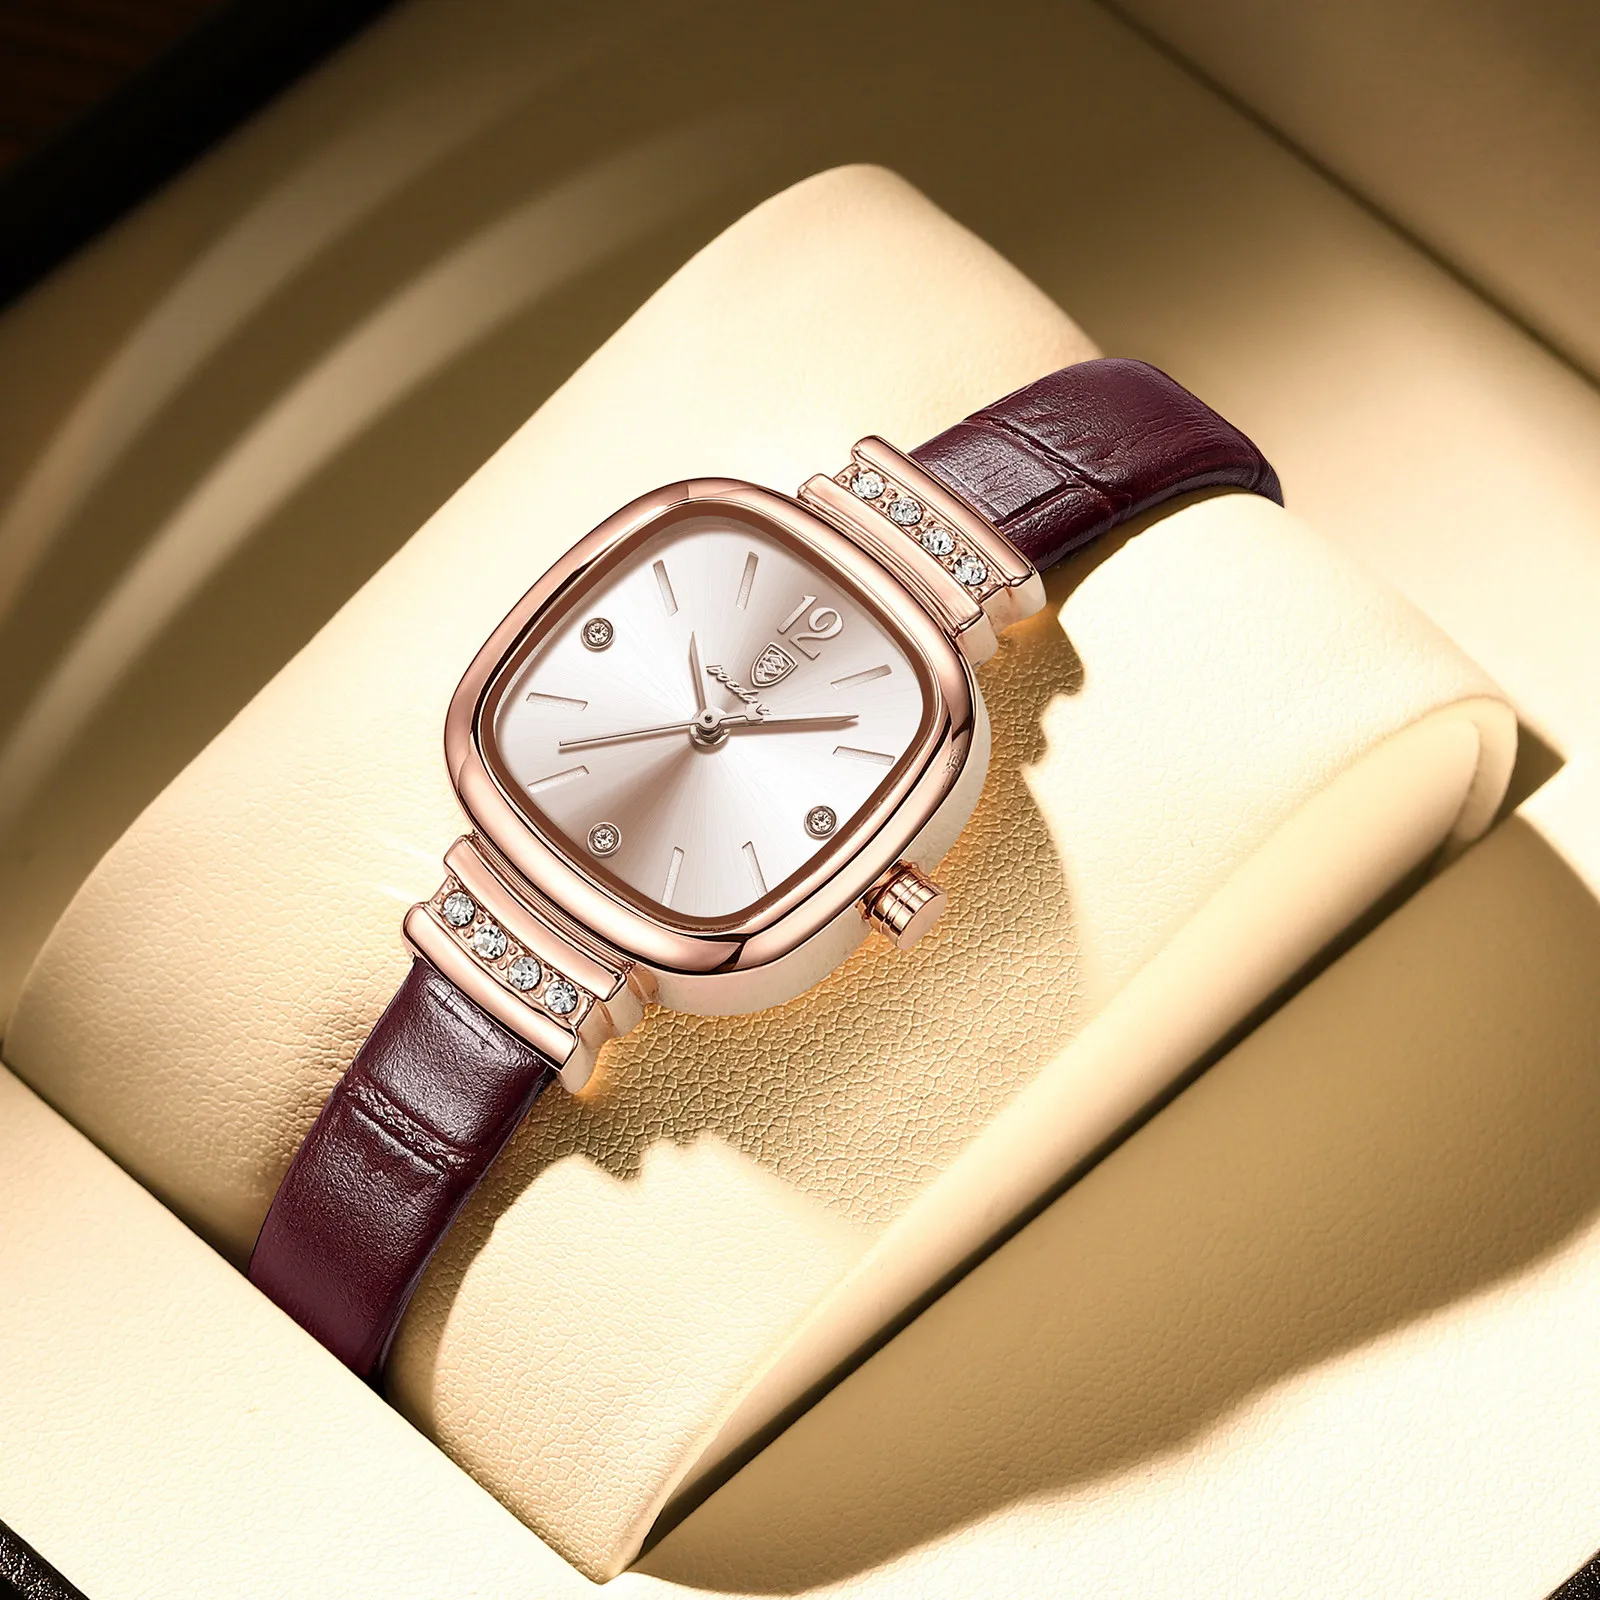 POEDAGAR Women's Watches Fashion Square Diamond Leather Waterproof Quartz Watch for Women Luxury Wristwatch Girlfriend Gift enlarge